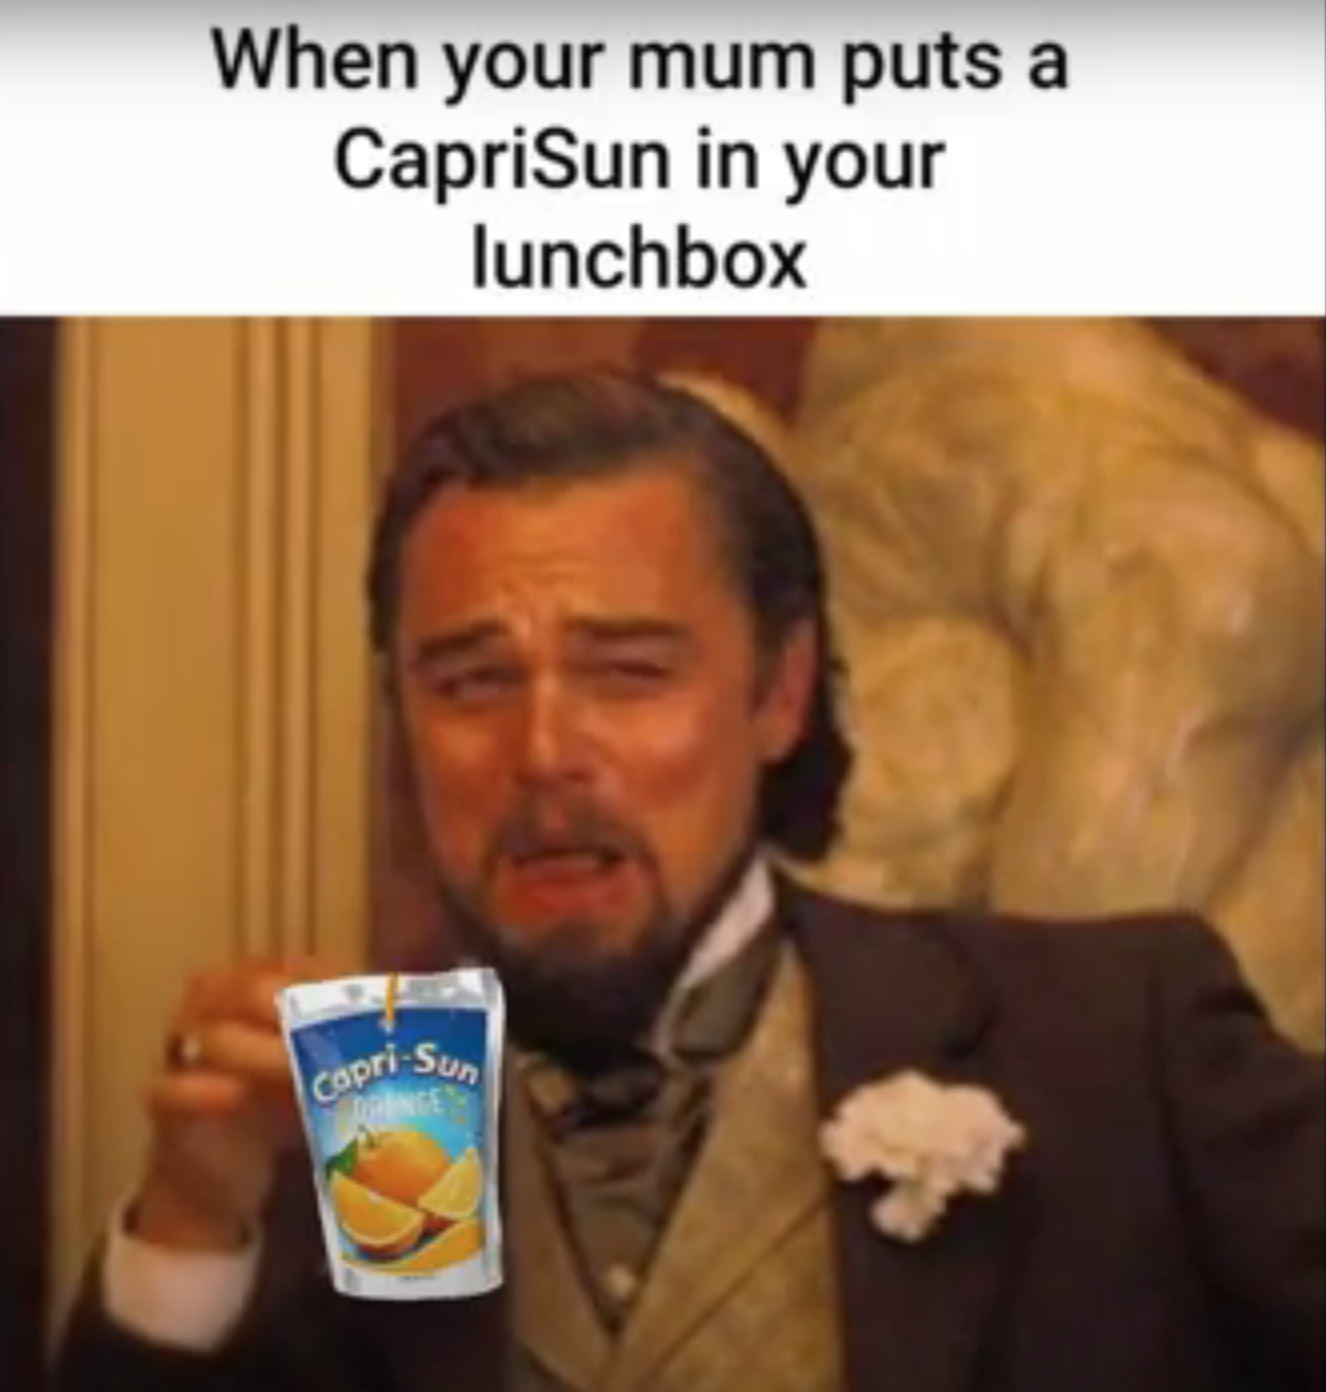 leonardo dicaprio laughing memes - leonardo dicaprio monster energy - When your mum puts a CapriSun in your lunchbox capri Sun